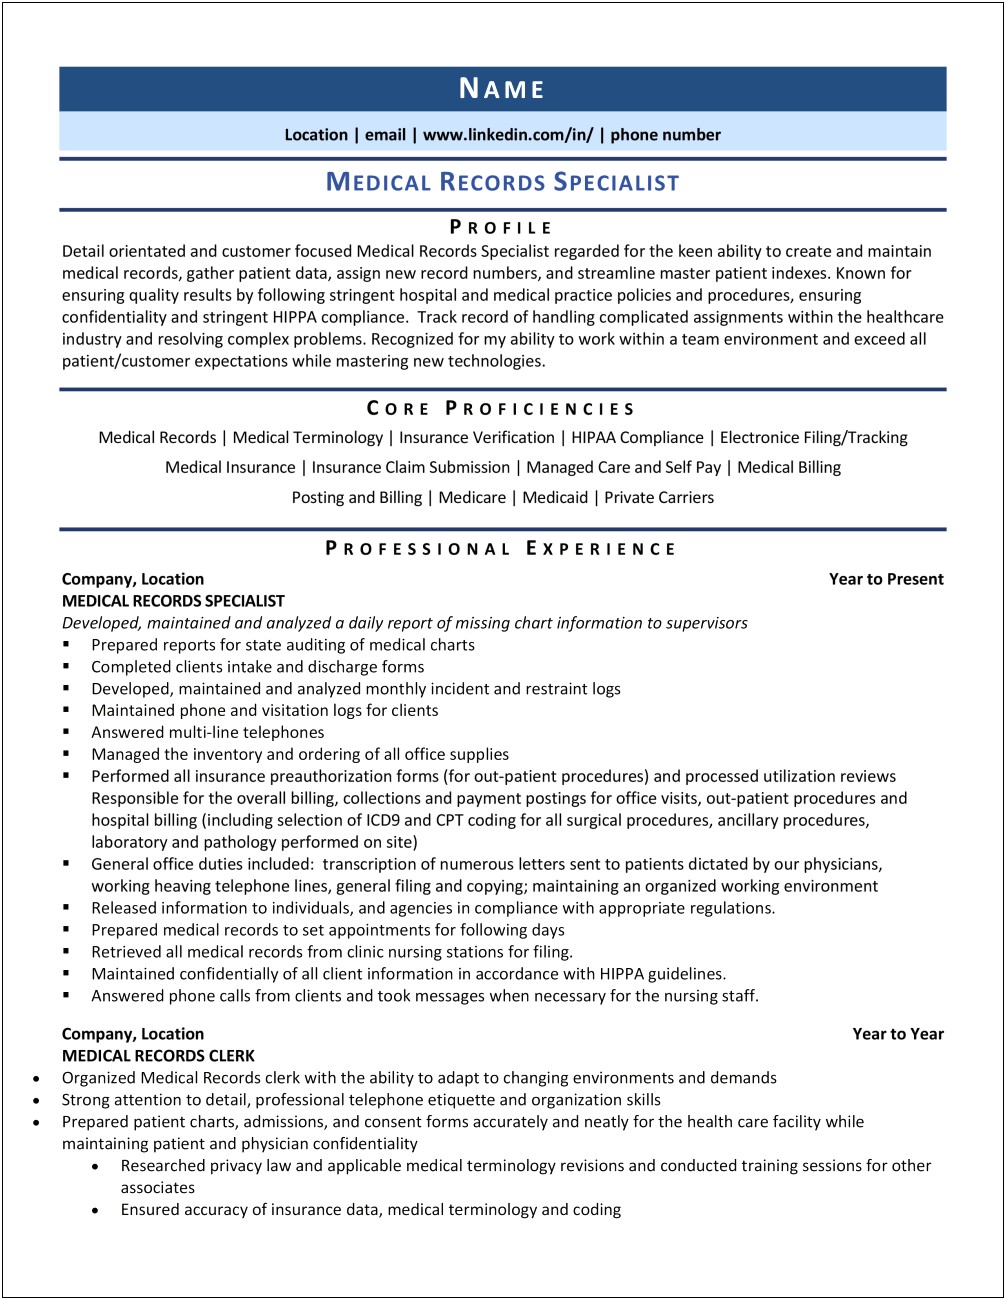 Resume Skill Utilize Epic Medical Records